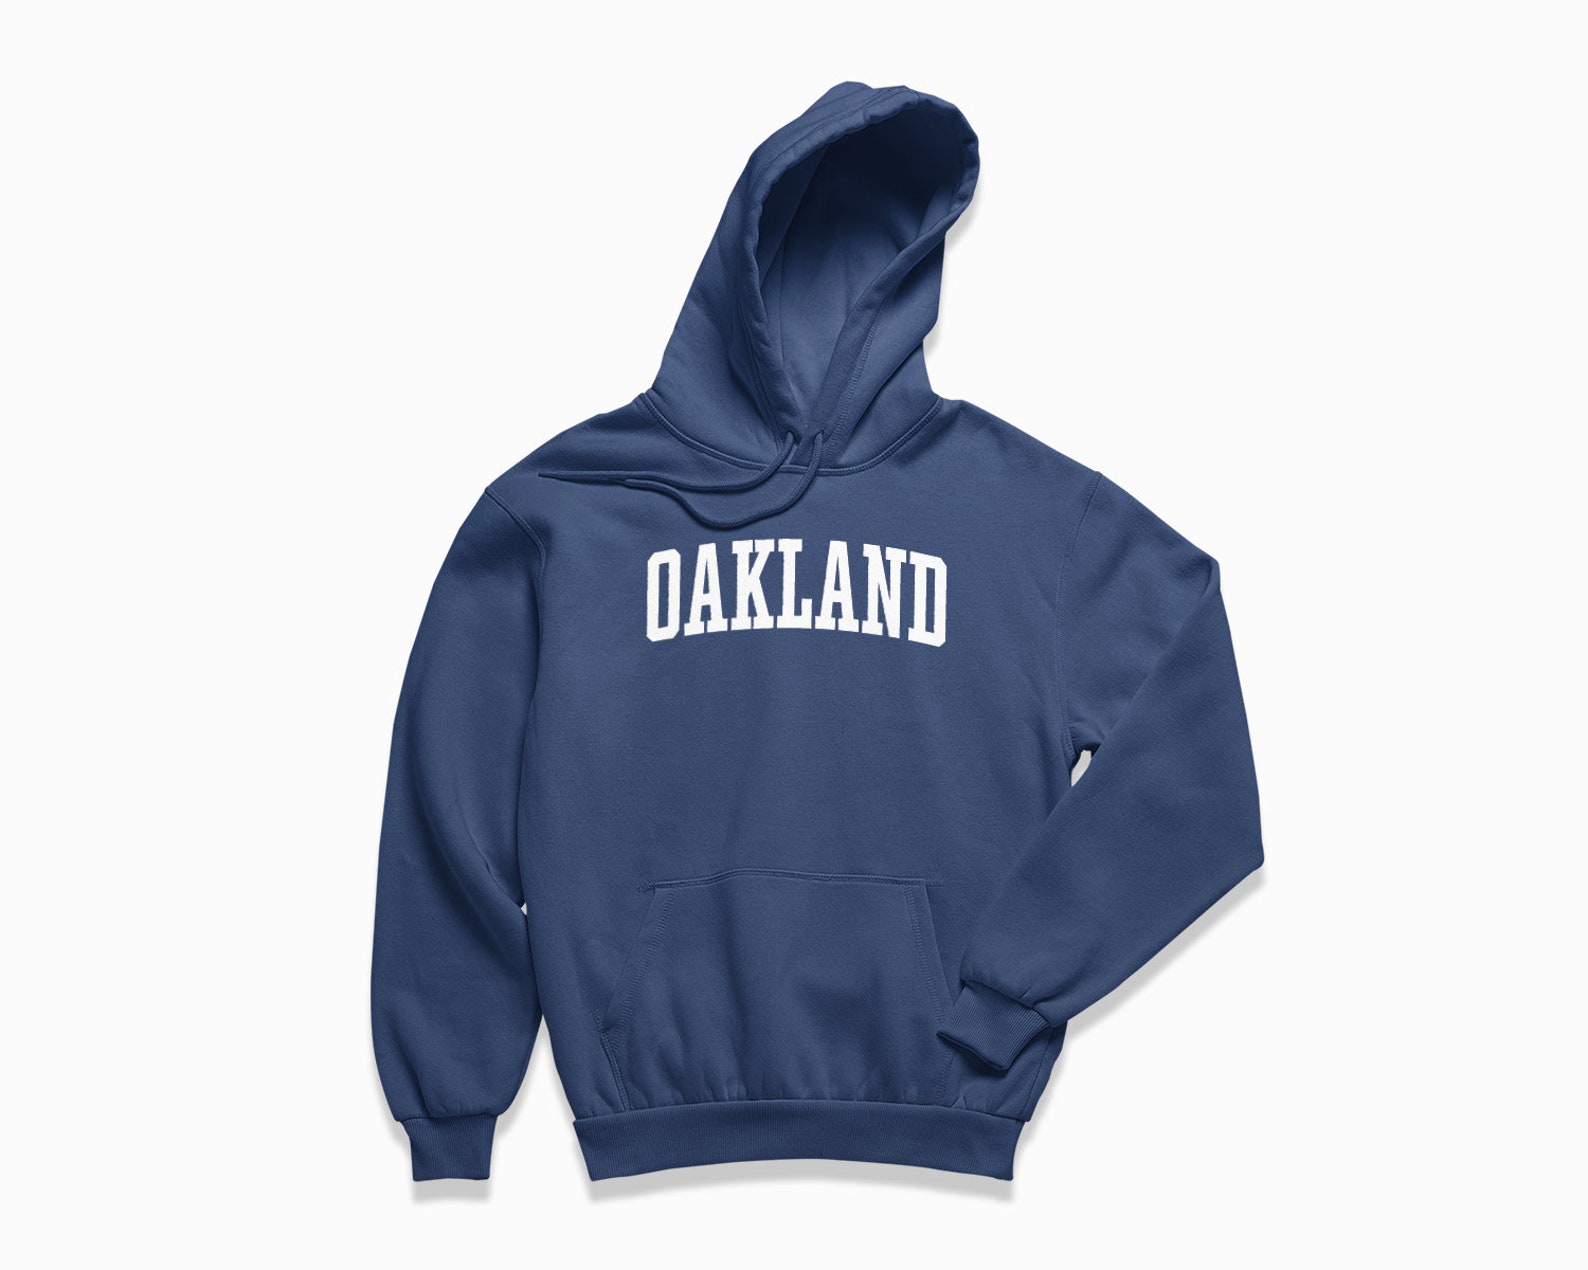 Oakland Hoodie: Oakland California Hooded Sweatshirt / College - Etsy UK